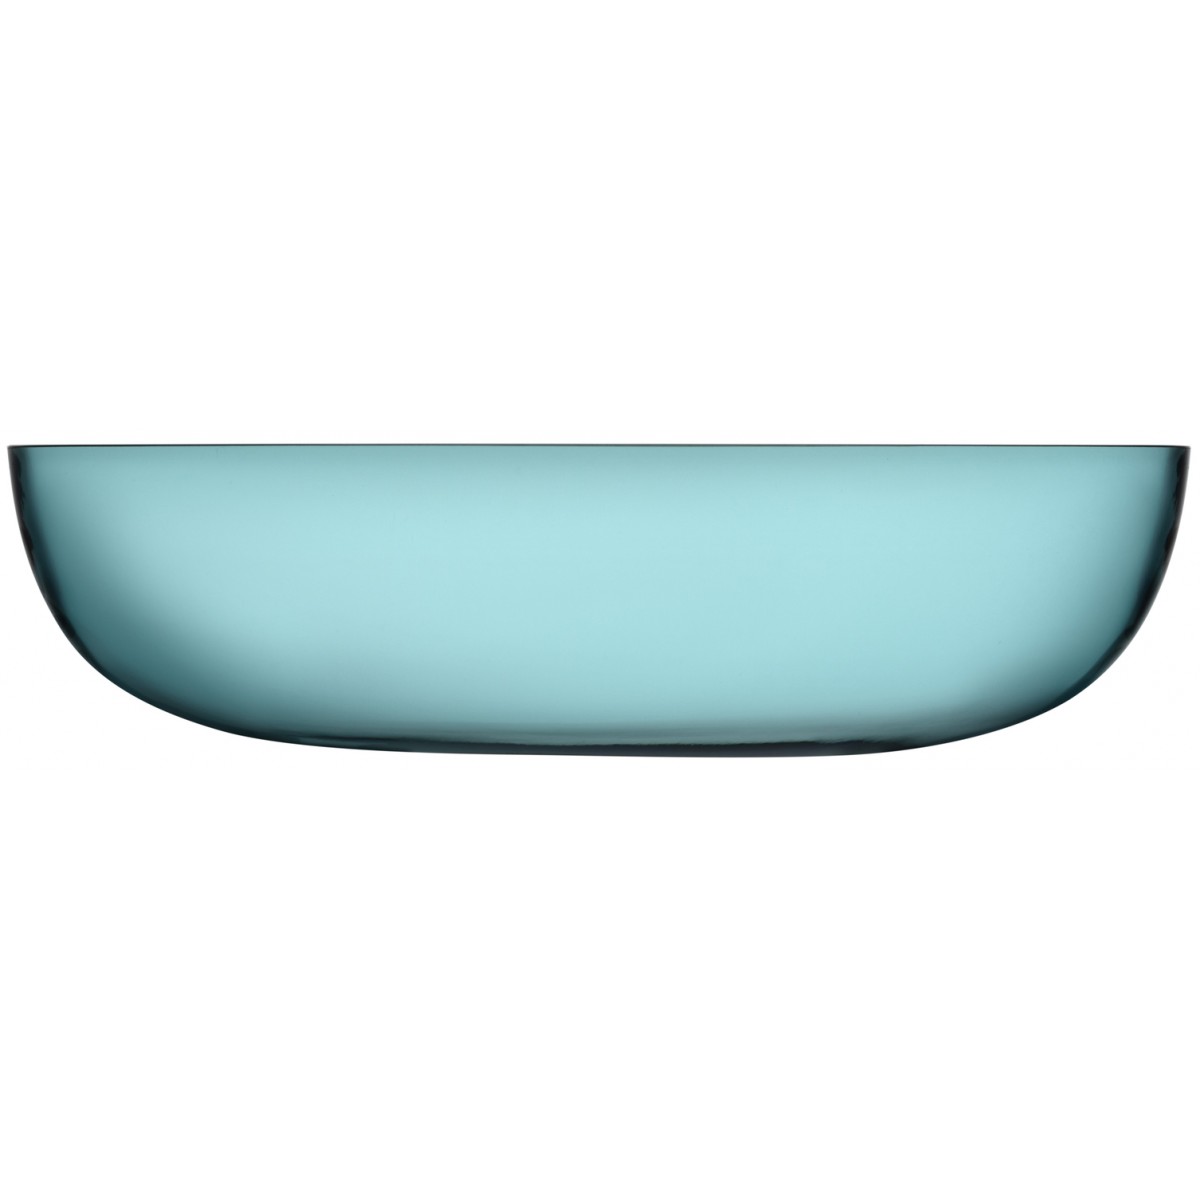 SOLD OUT - Raami serving bowl – ocean blue – 3,4L